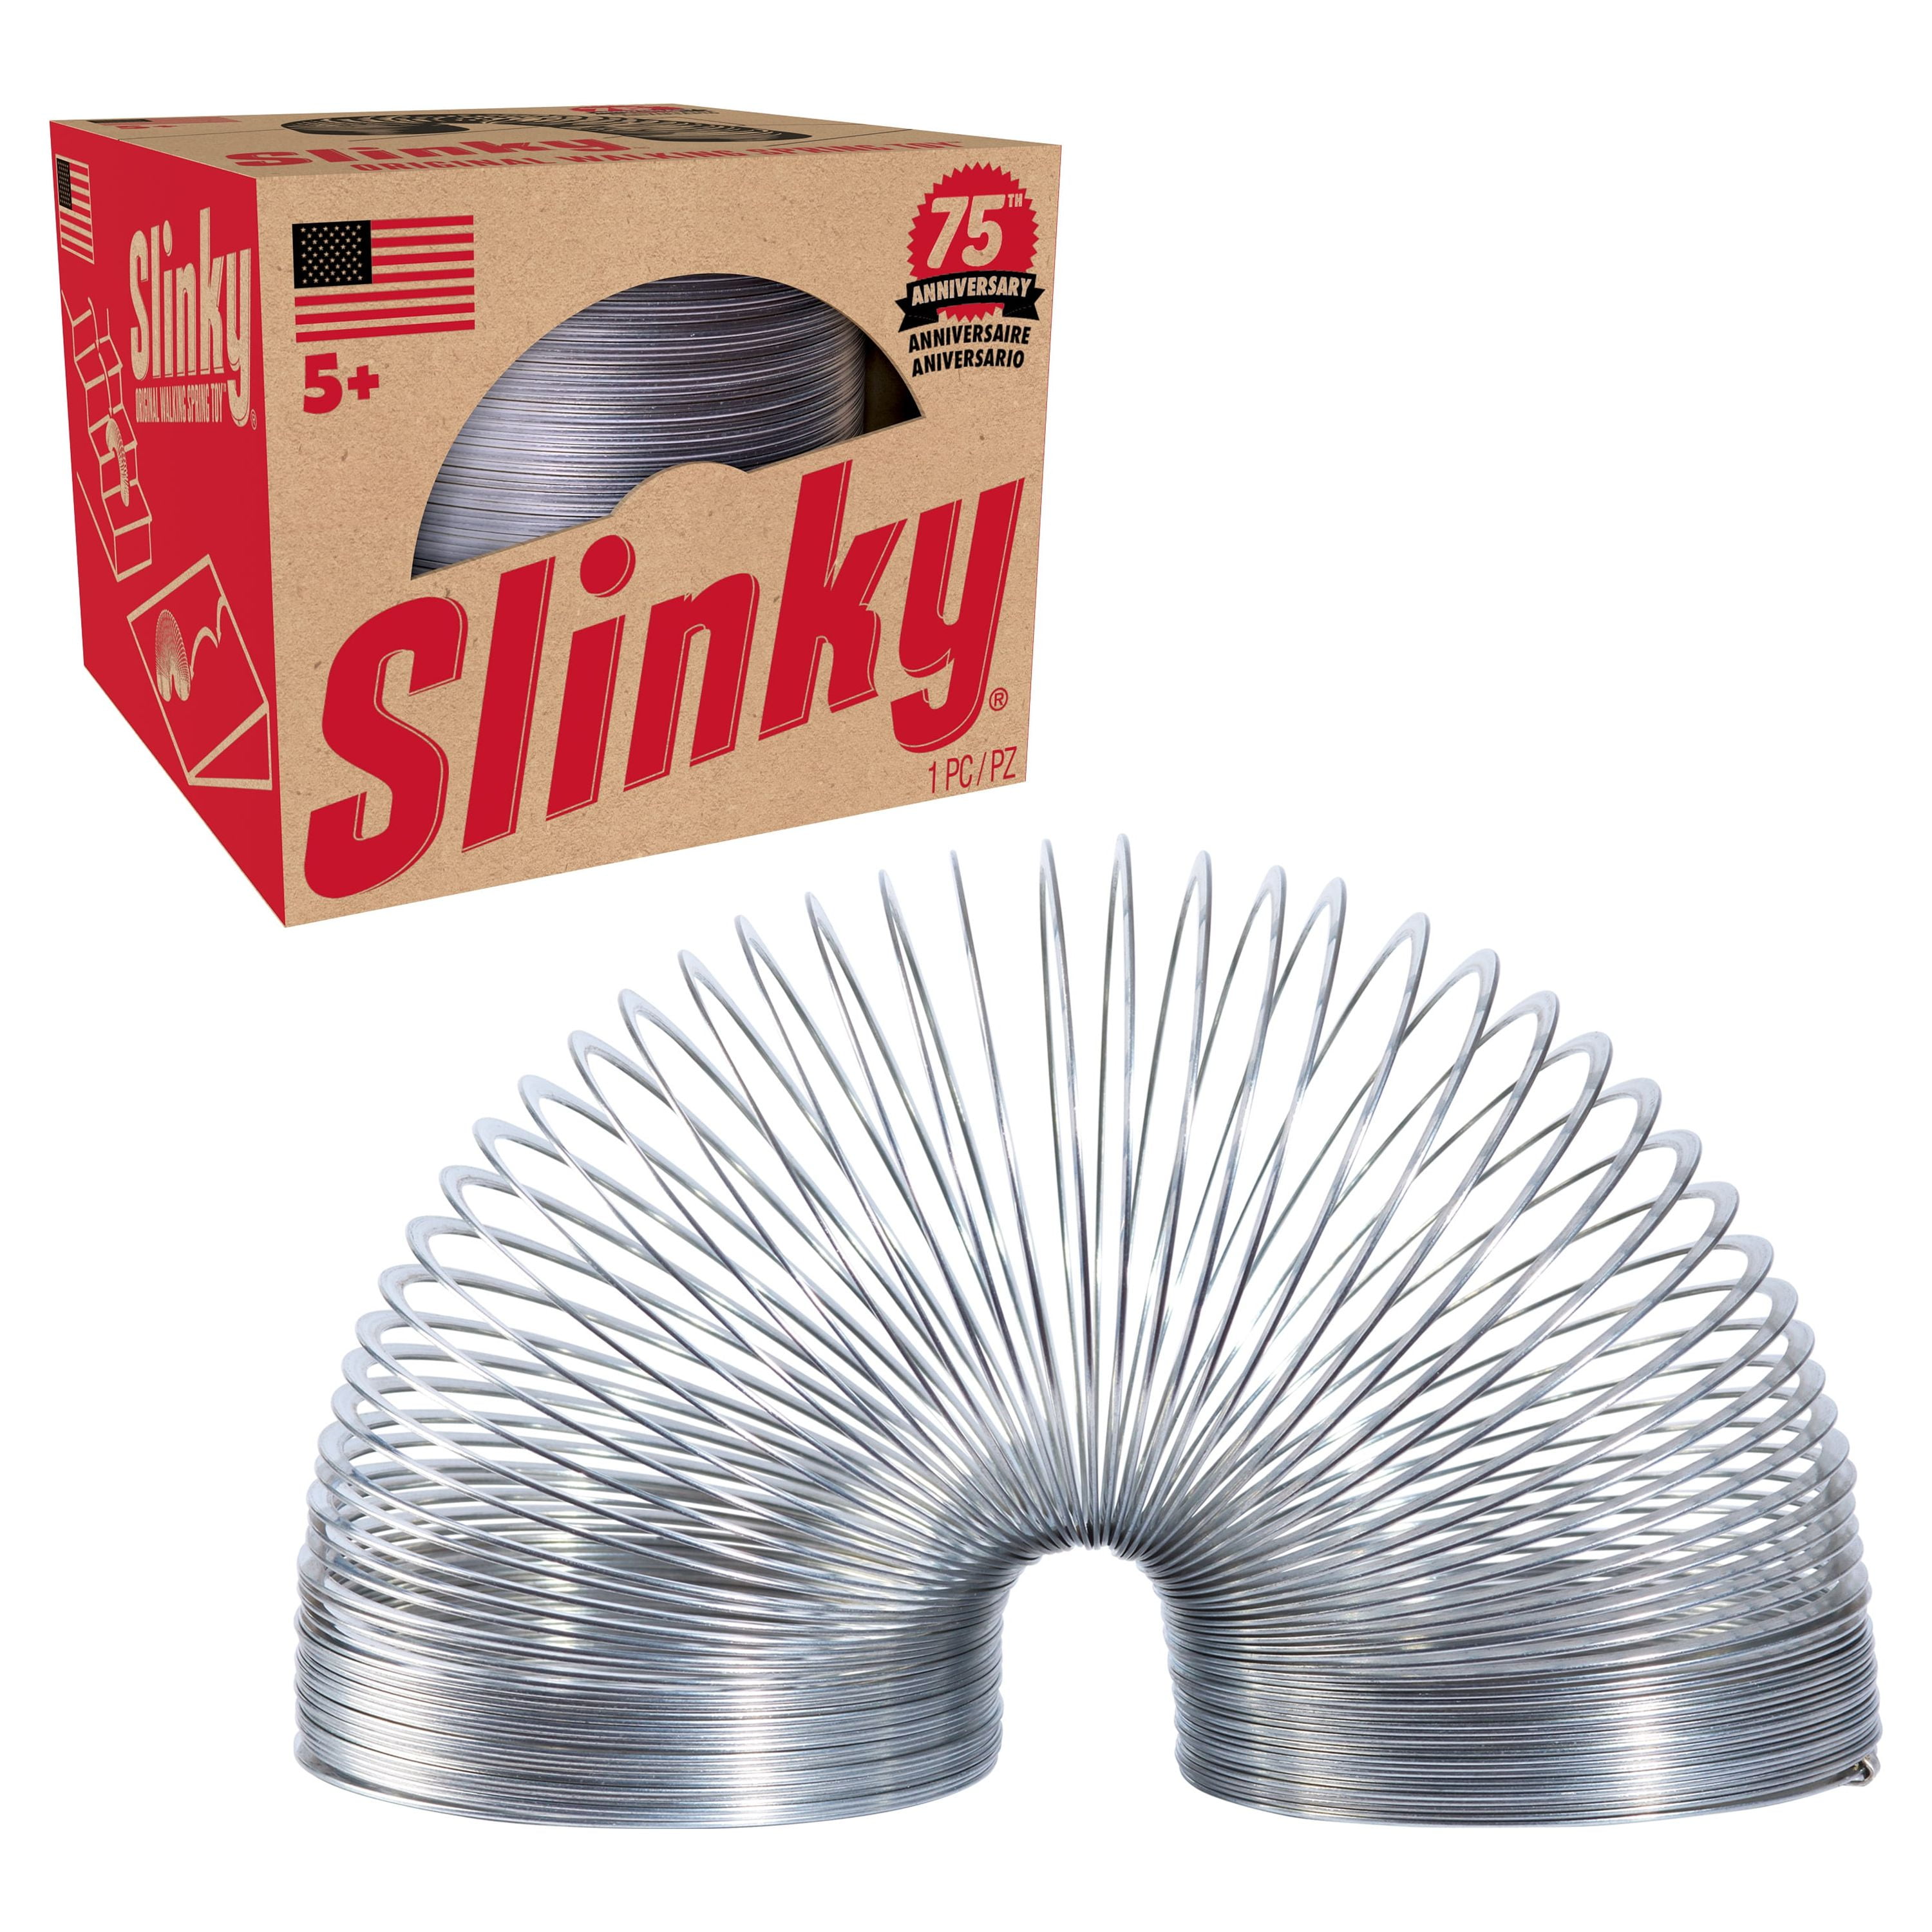 Retro Slinky the Original Walking Spring Toy, Silver Metal Slinky, Ages 5+ $5.80